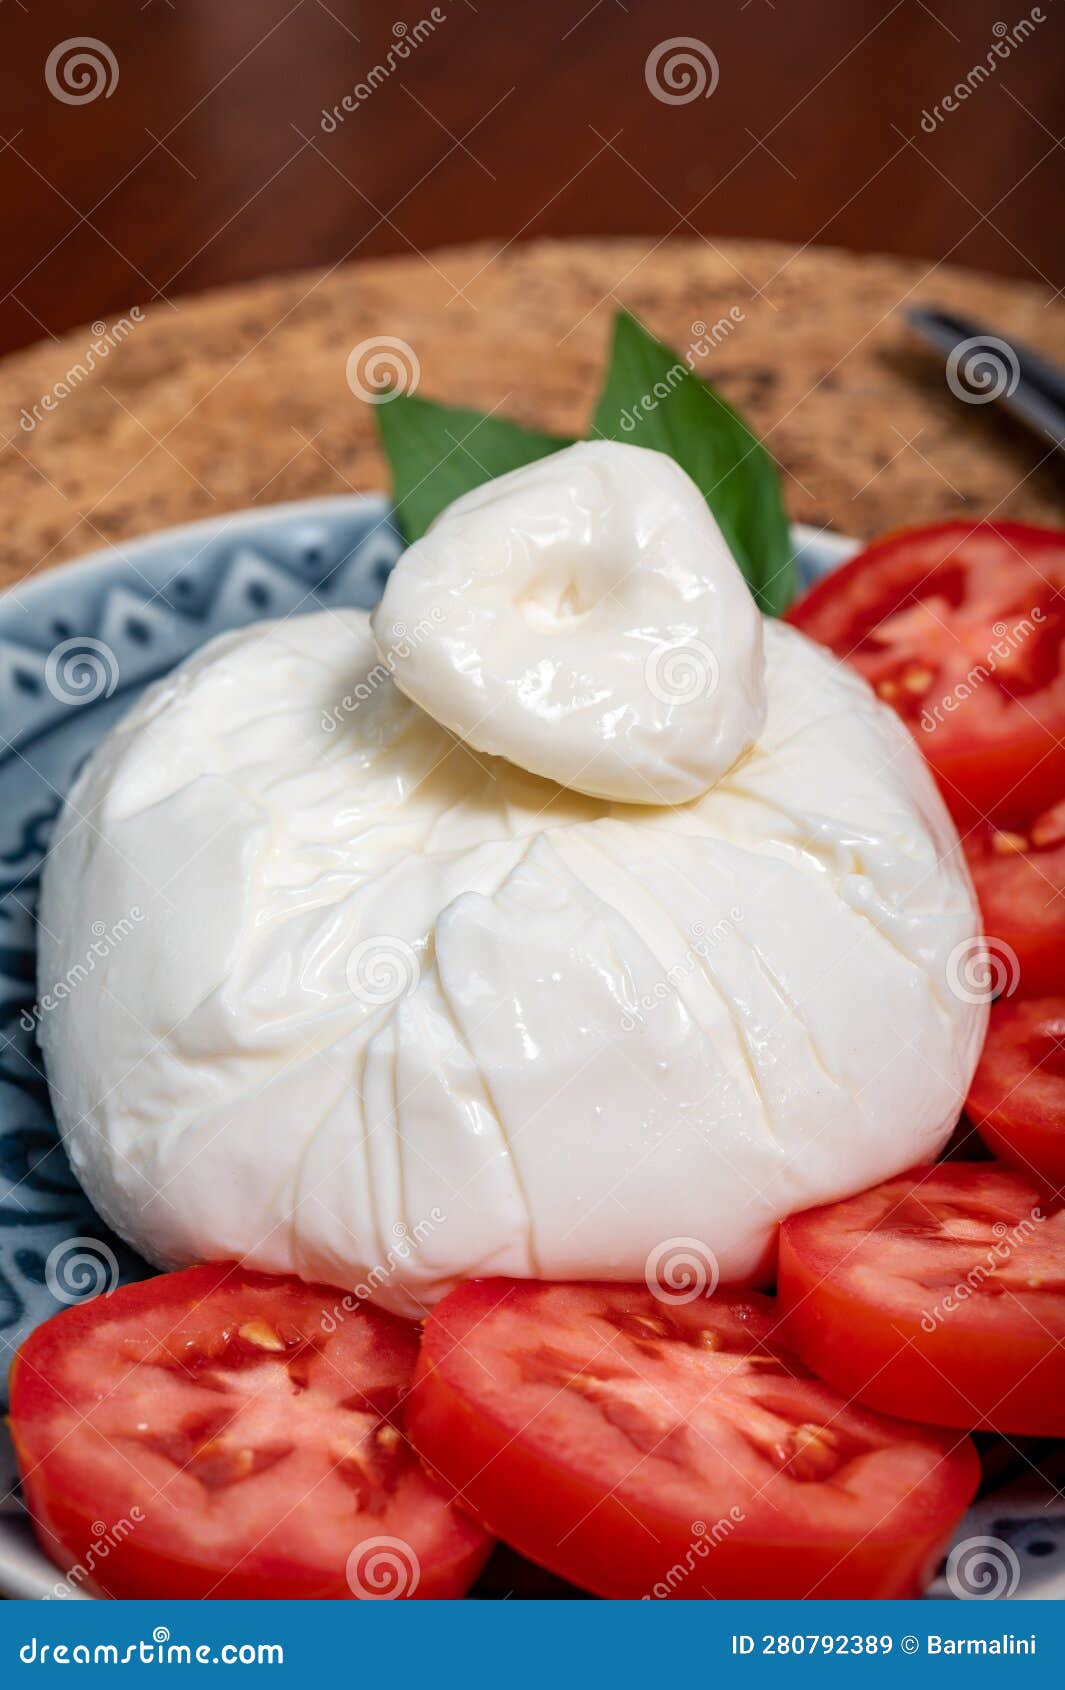 fresh handmade soft italian cheese from puglia, white ball of burrata foglia saporosa or burratina cheese made from mozzarella and